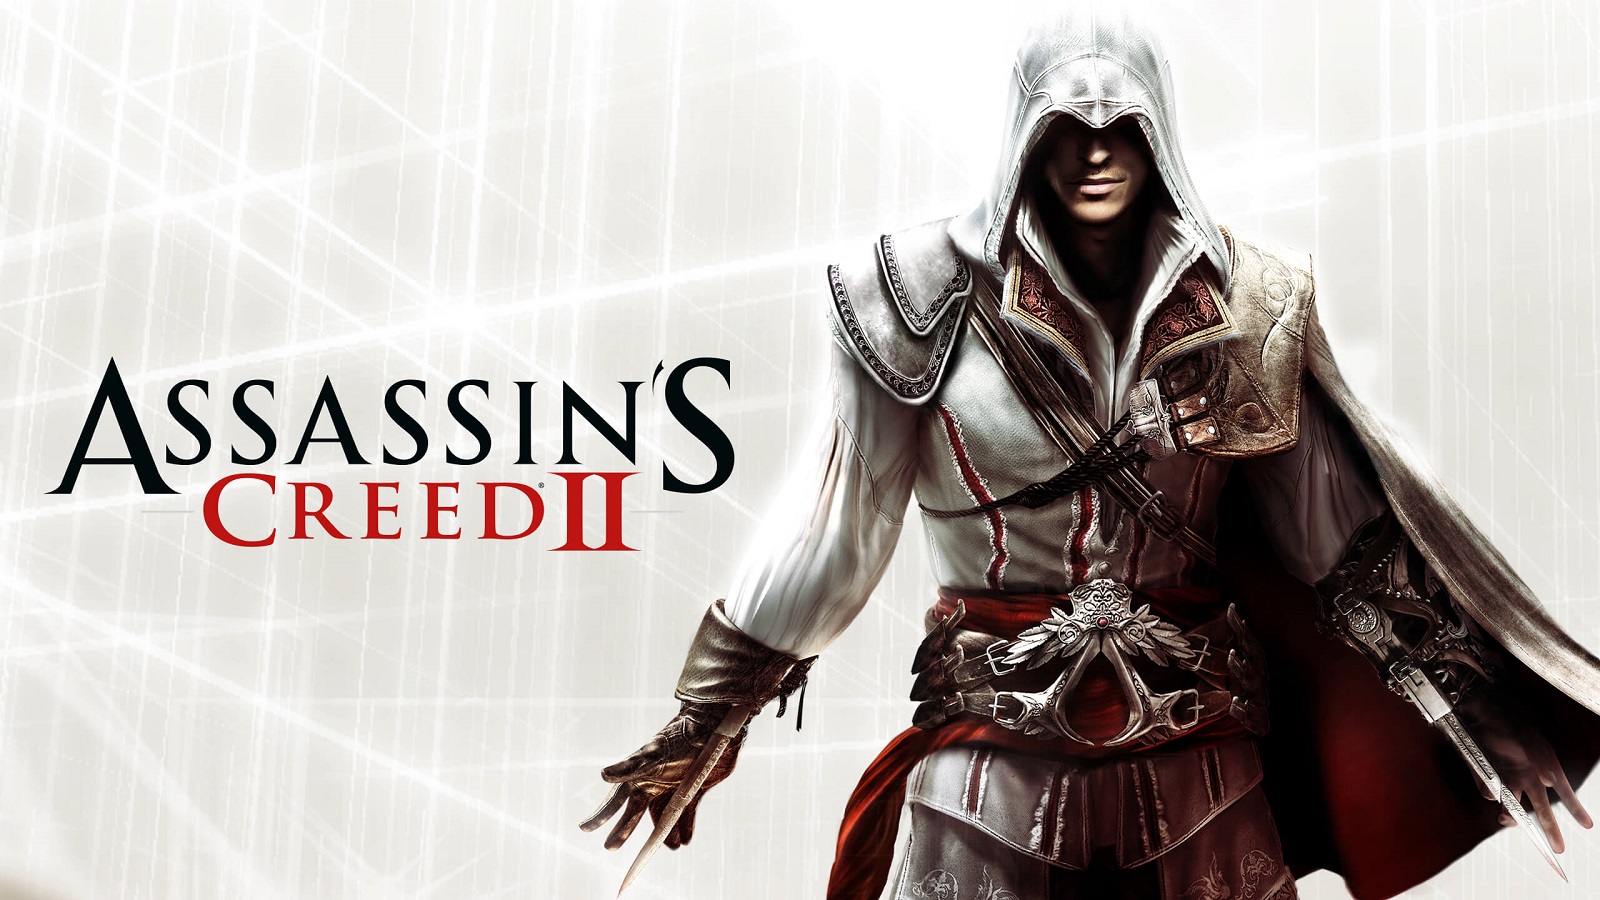 Assassin's, Creed, II, ACII, Ubisoft, Gaming, remastered